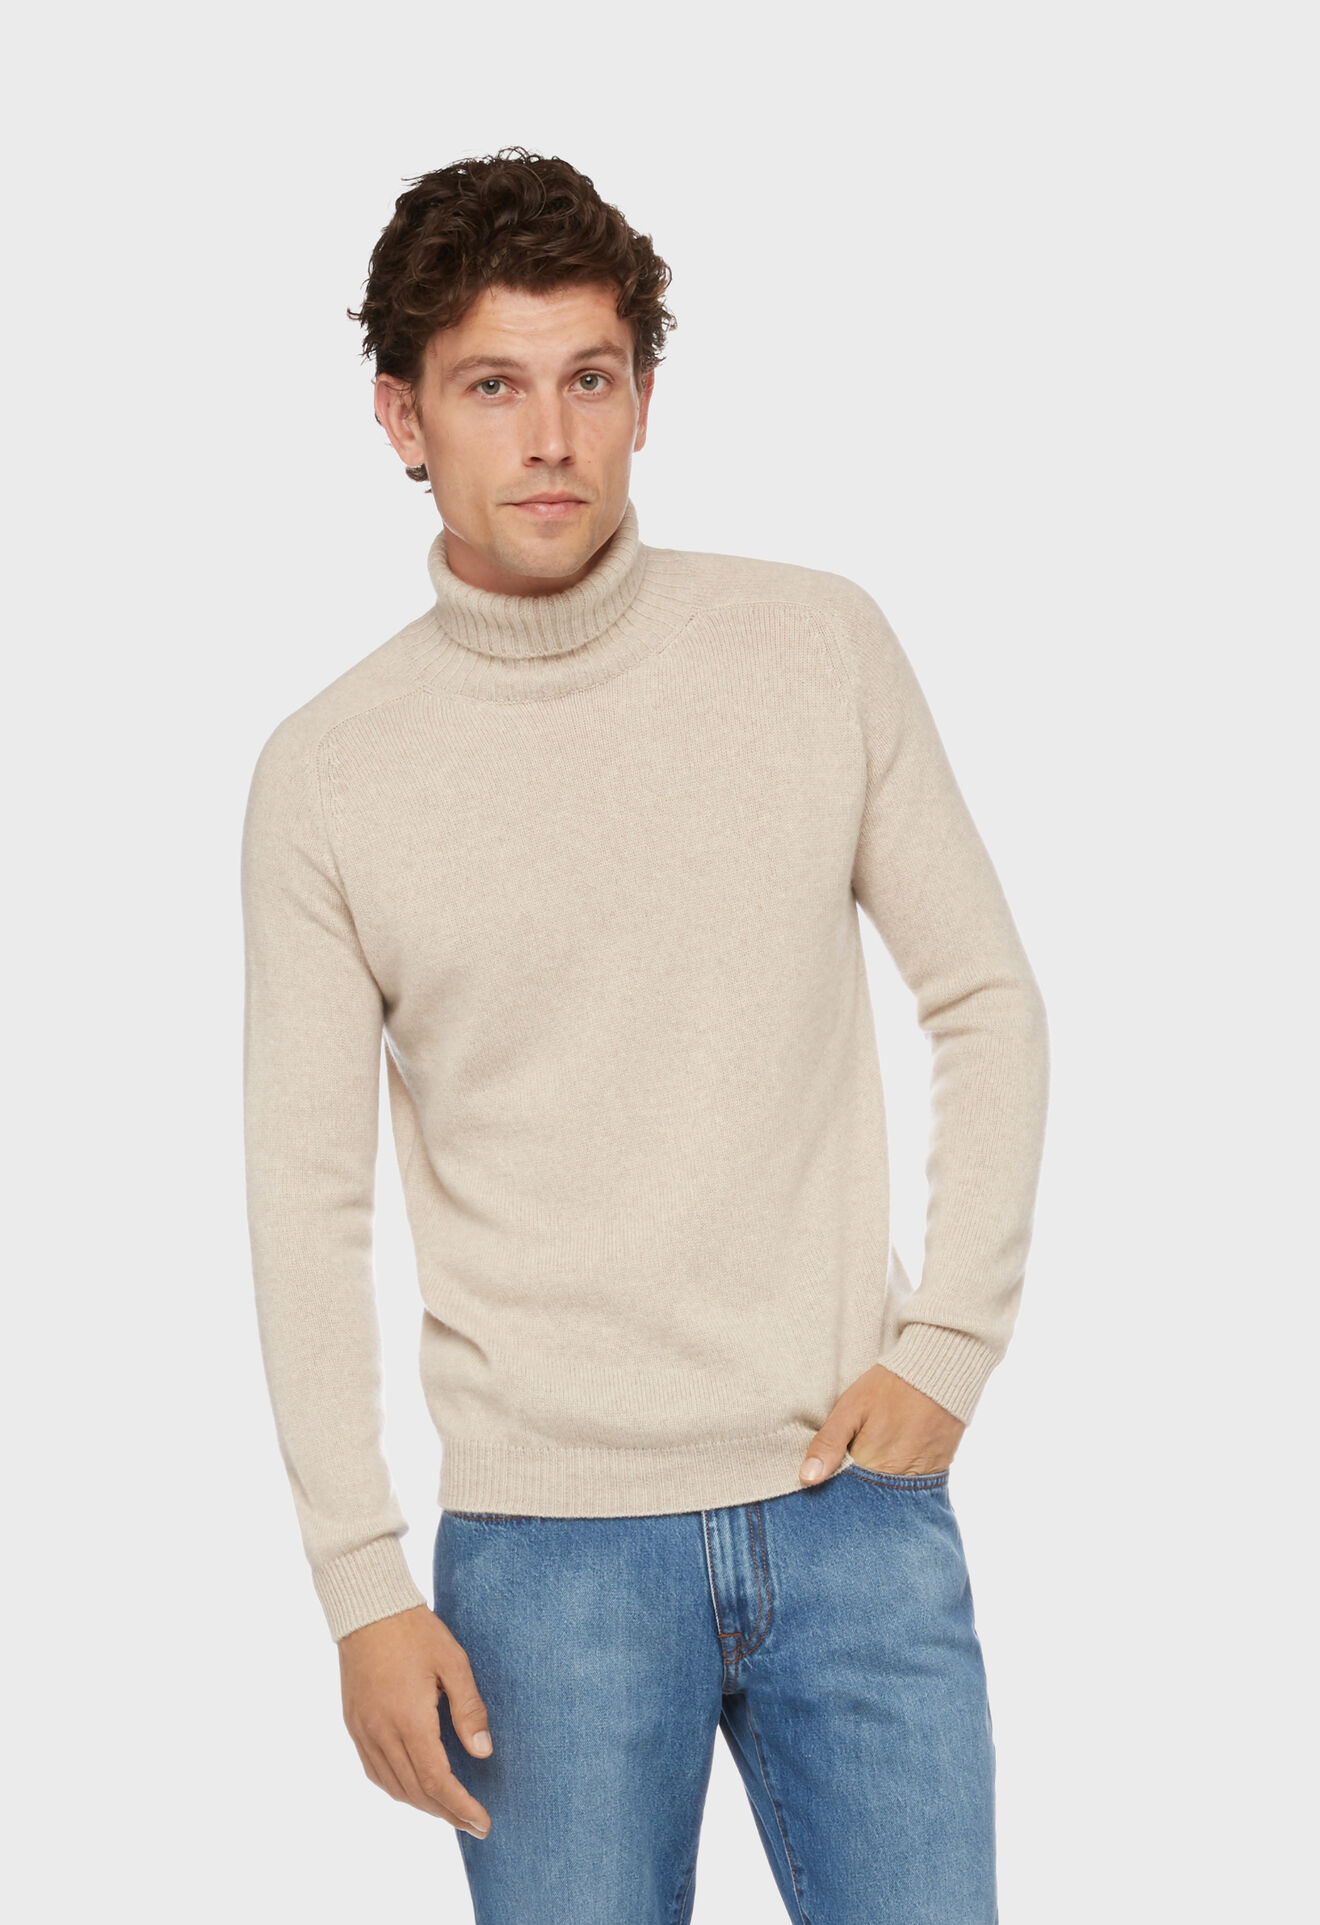 Men’s Pure Cashmere Turtleneck Sweater